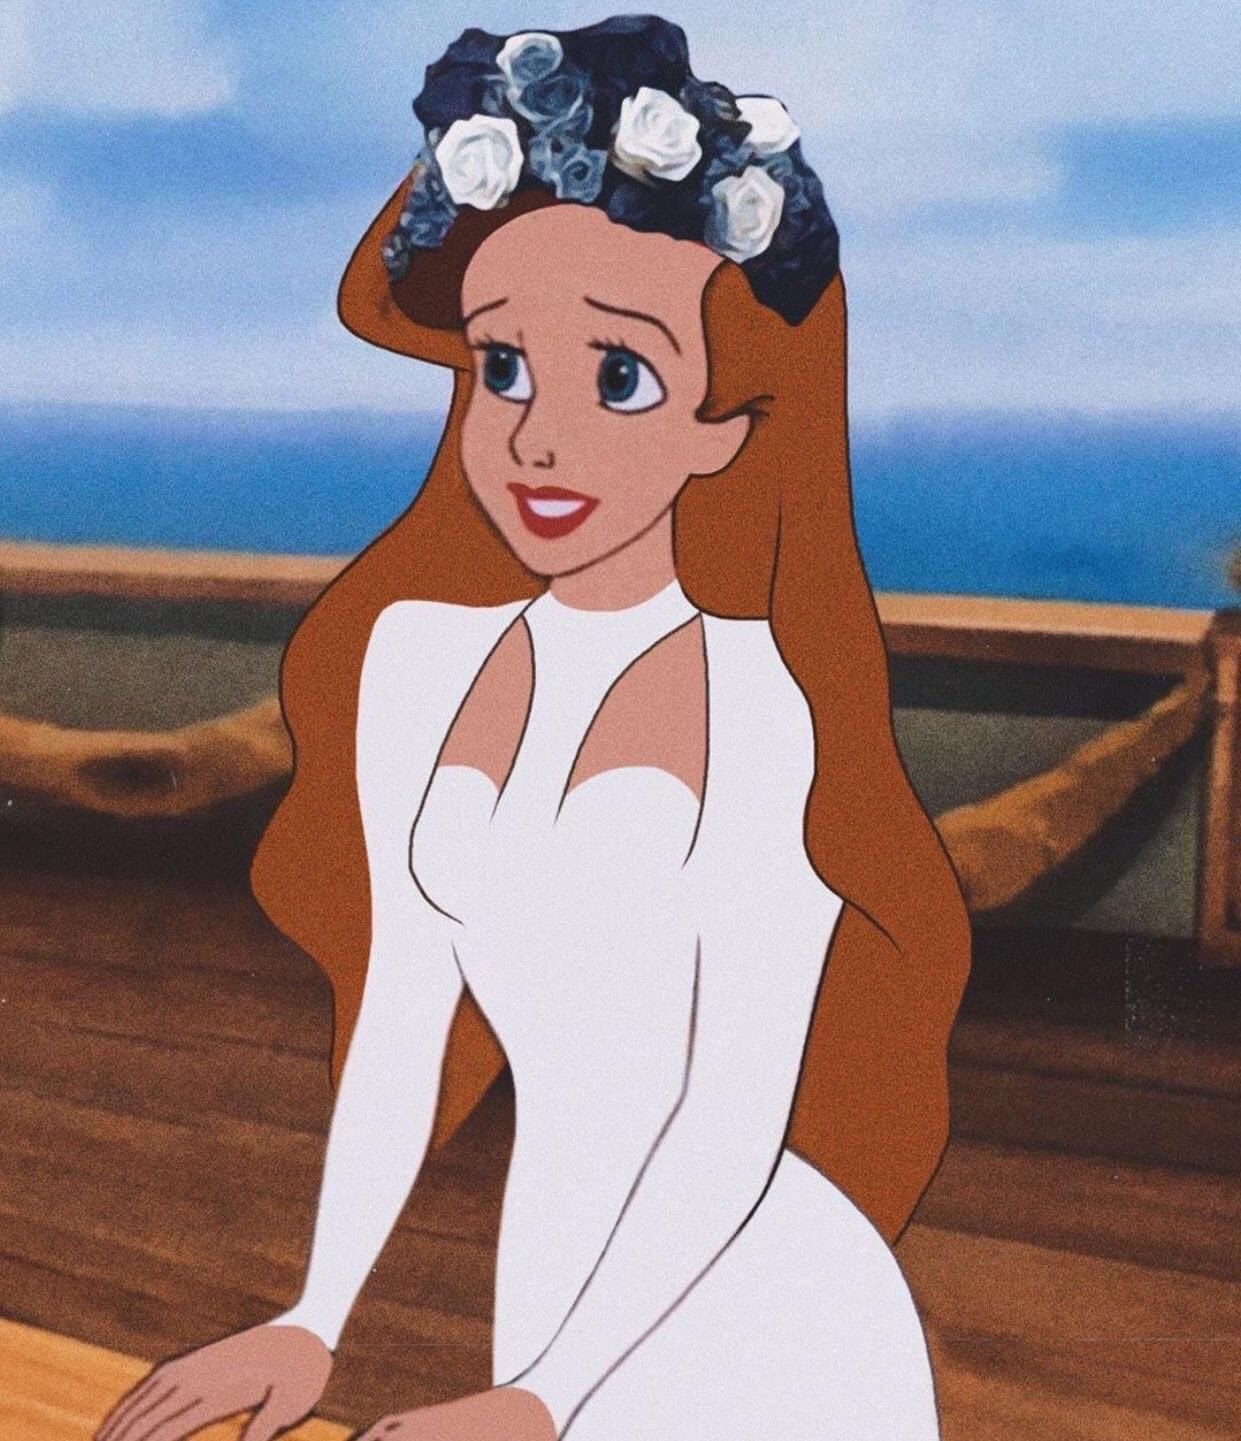 Ariel in a wedding dress with a flower crown - Ariel